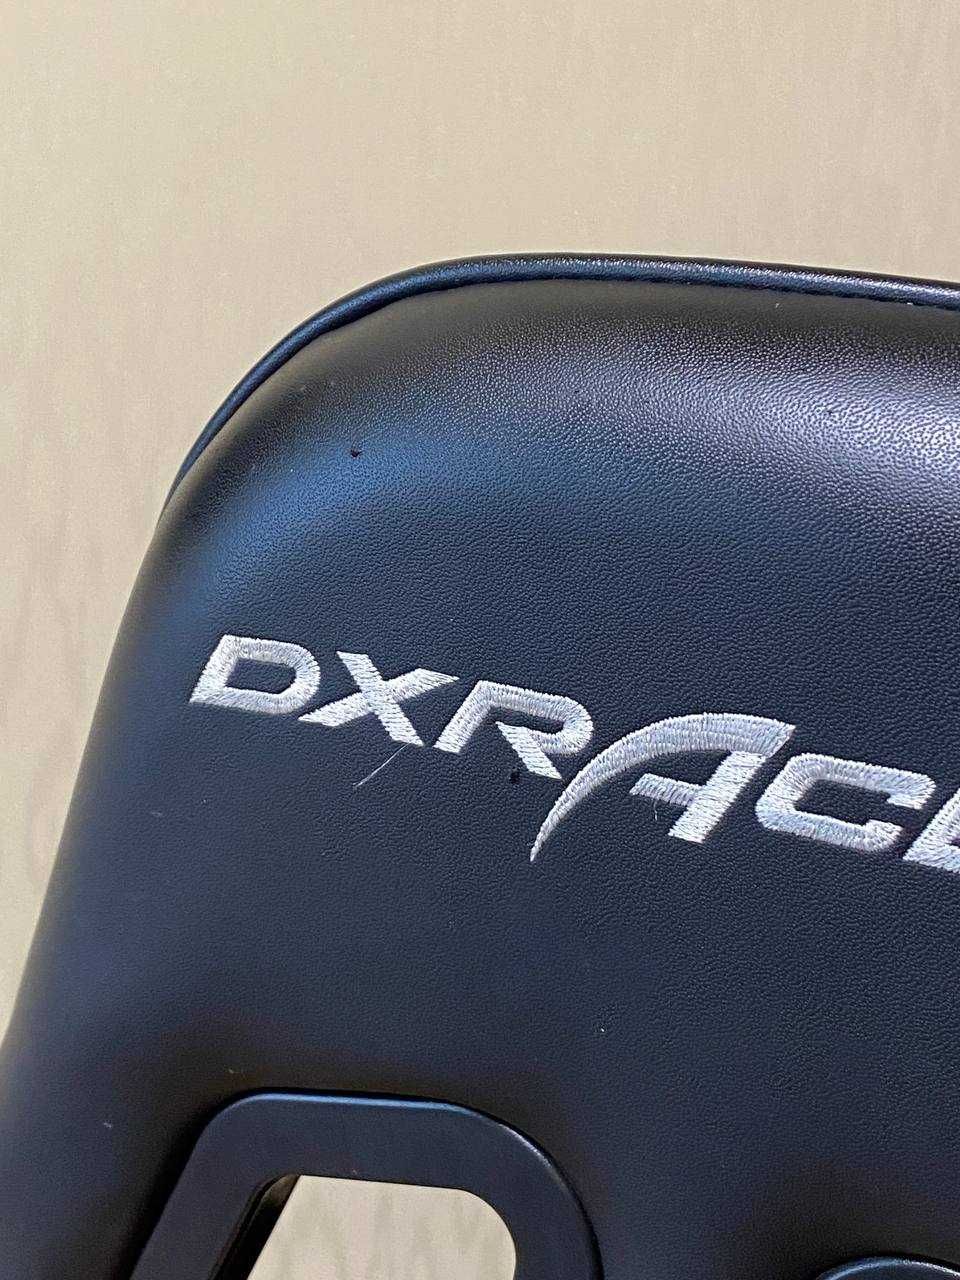 Ігрове крісло DXRacer P Series Black